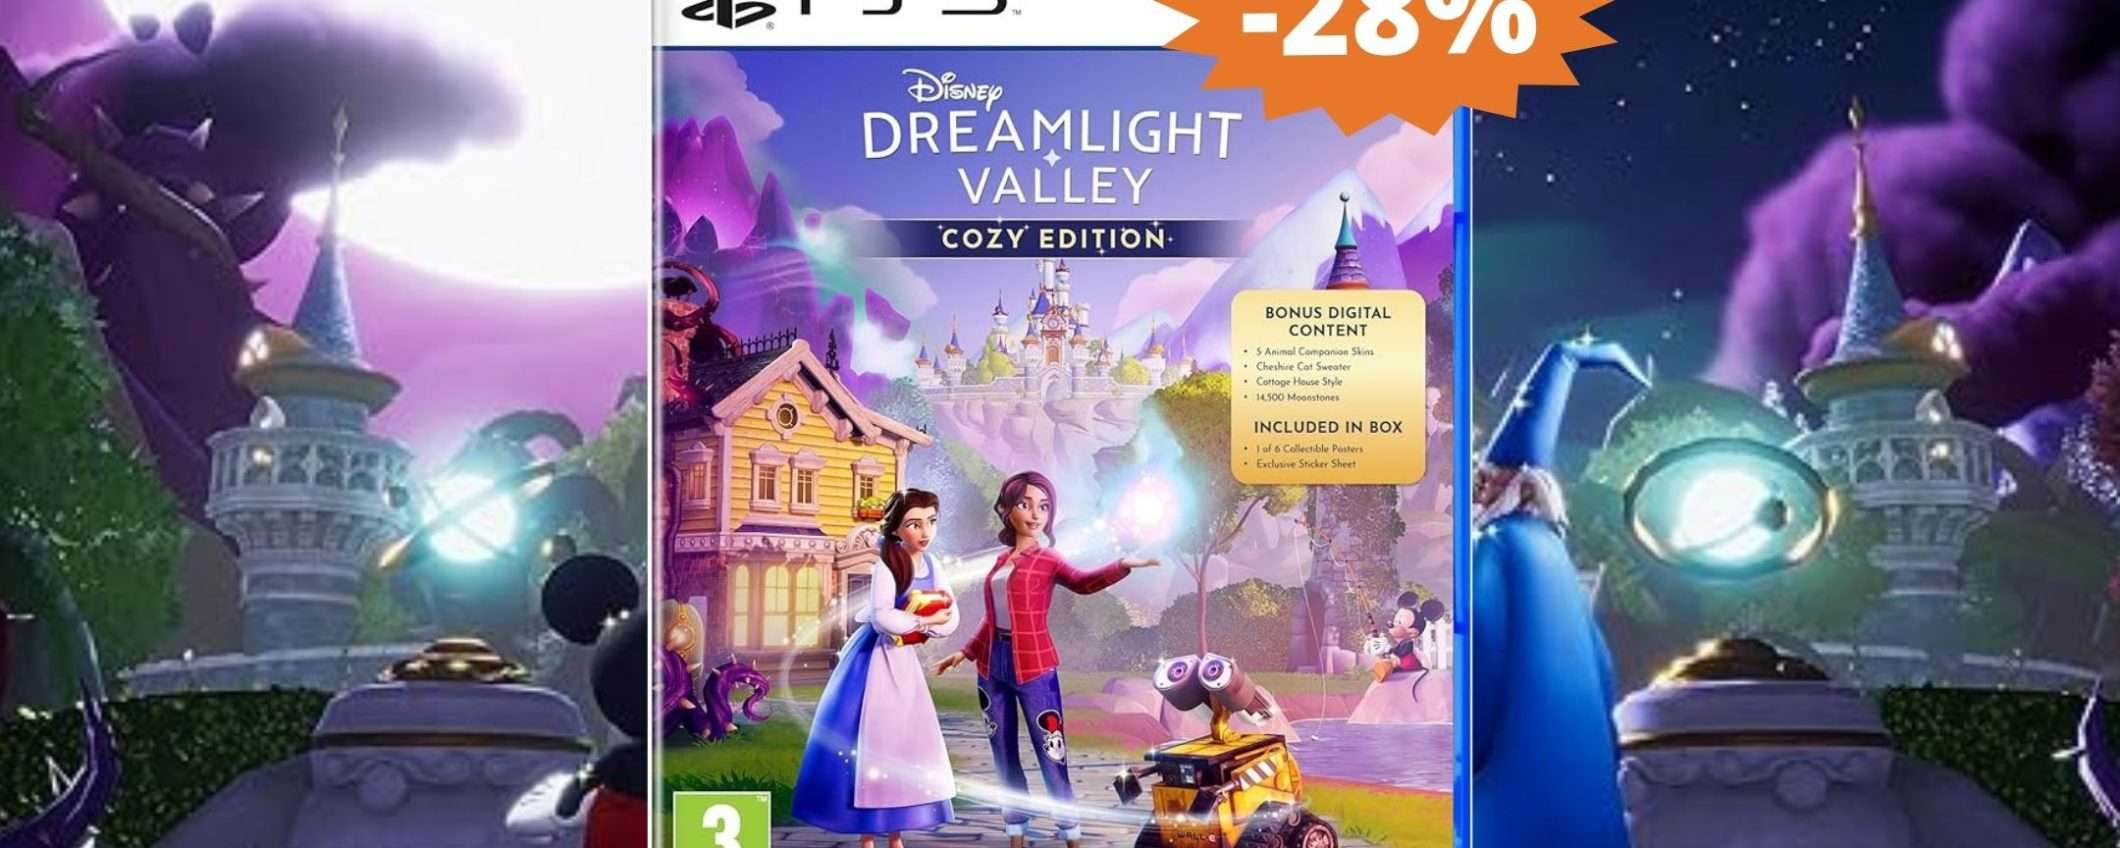 Disney Dreamlight Valley per PS5: un mondo INCANTATO (-28%)